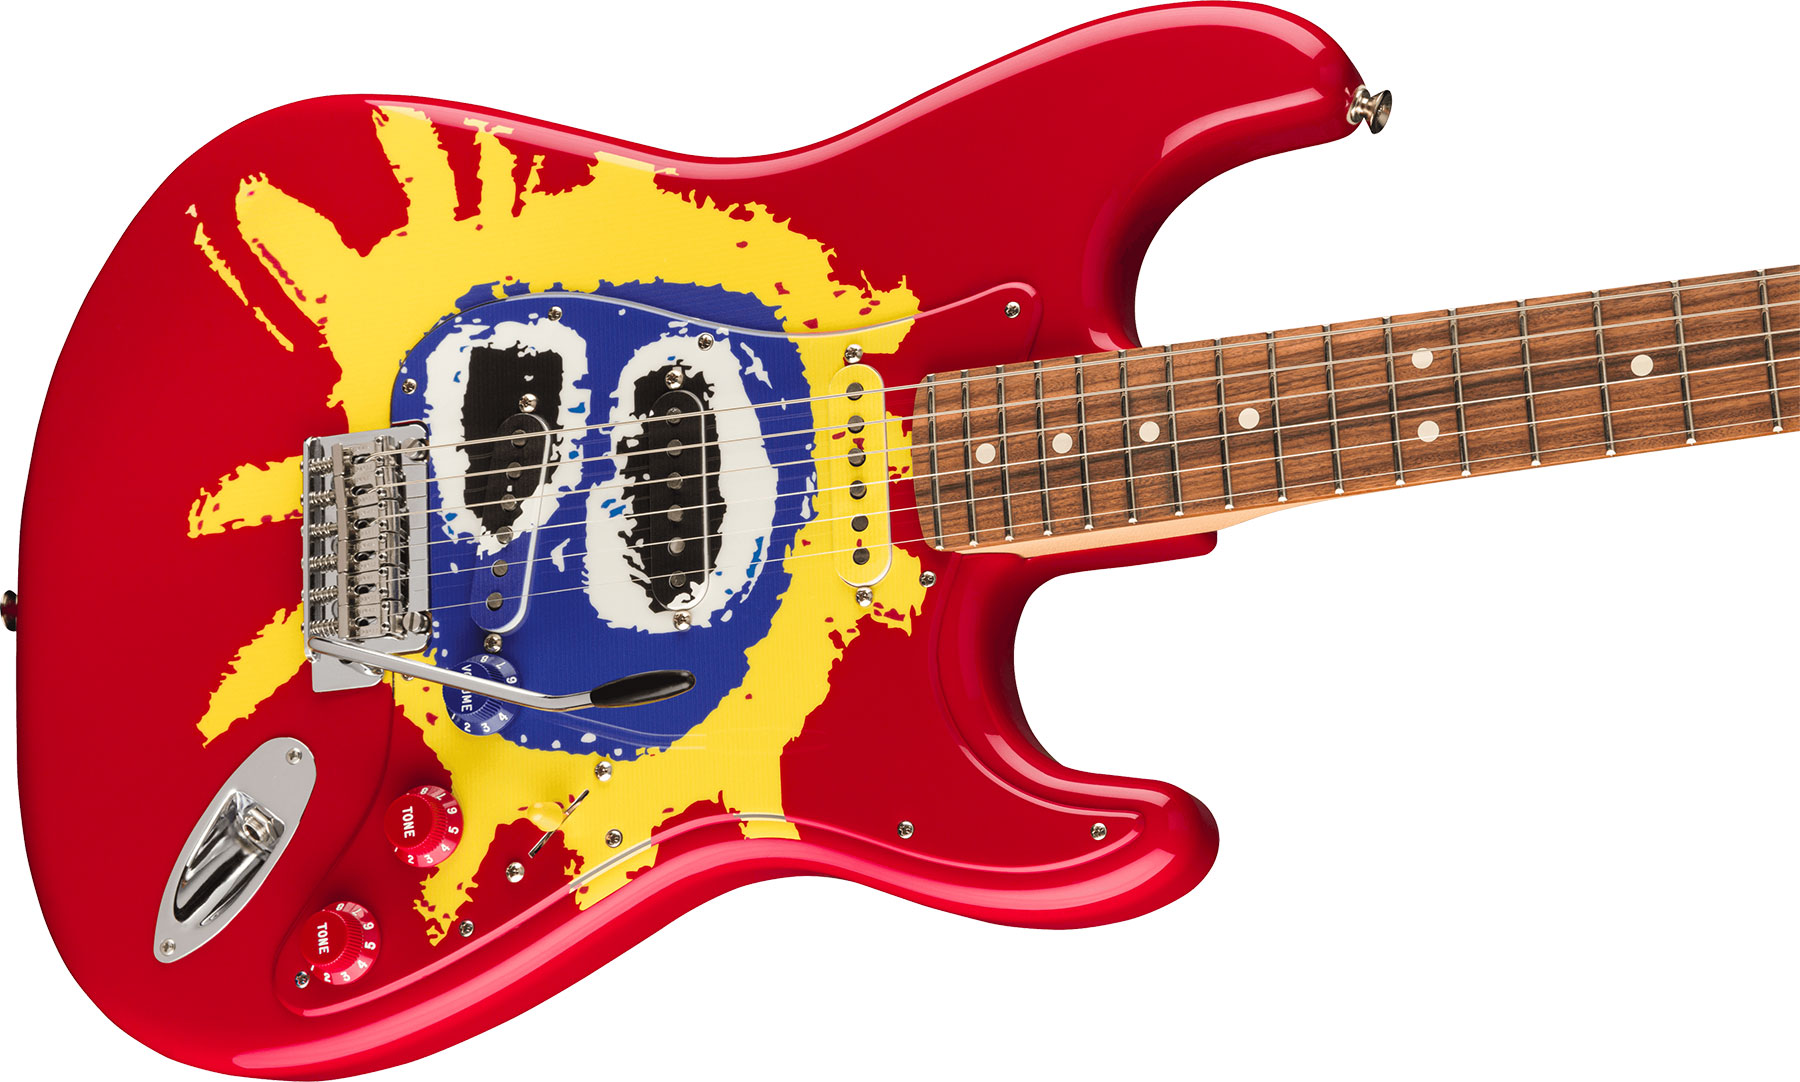 Fender Strat 30th Anniversary Screamadelica Ltd Mex 3s Trem Pf - Red Blue Yellow - Str shape electric guitar - Variation 2